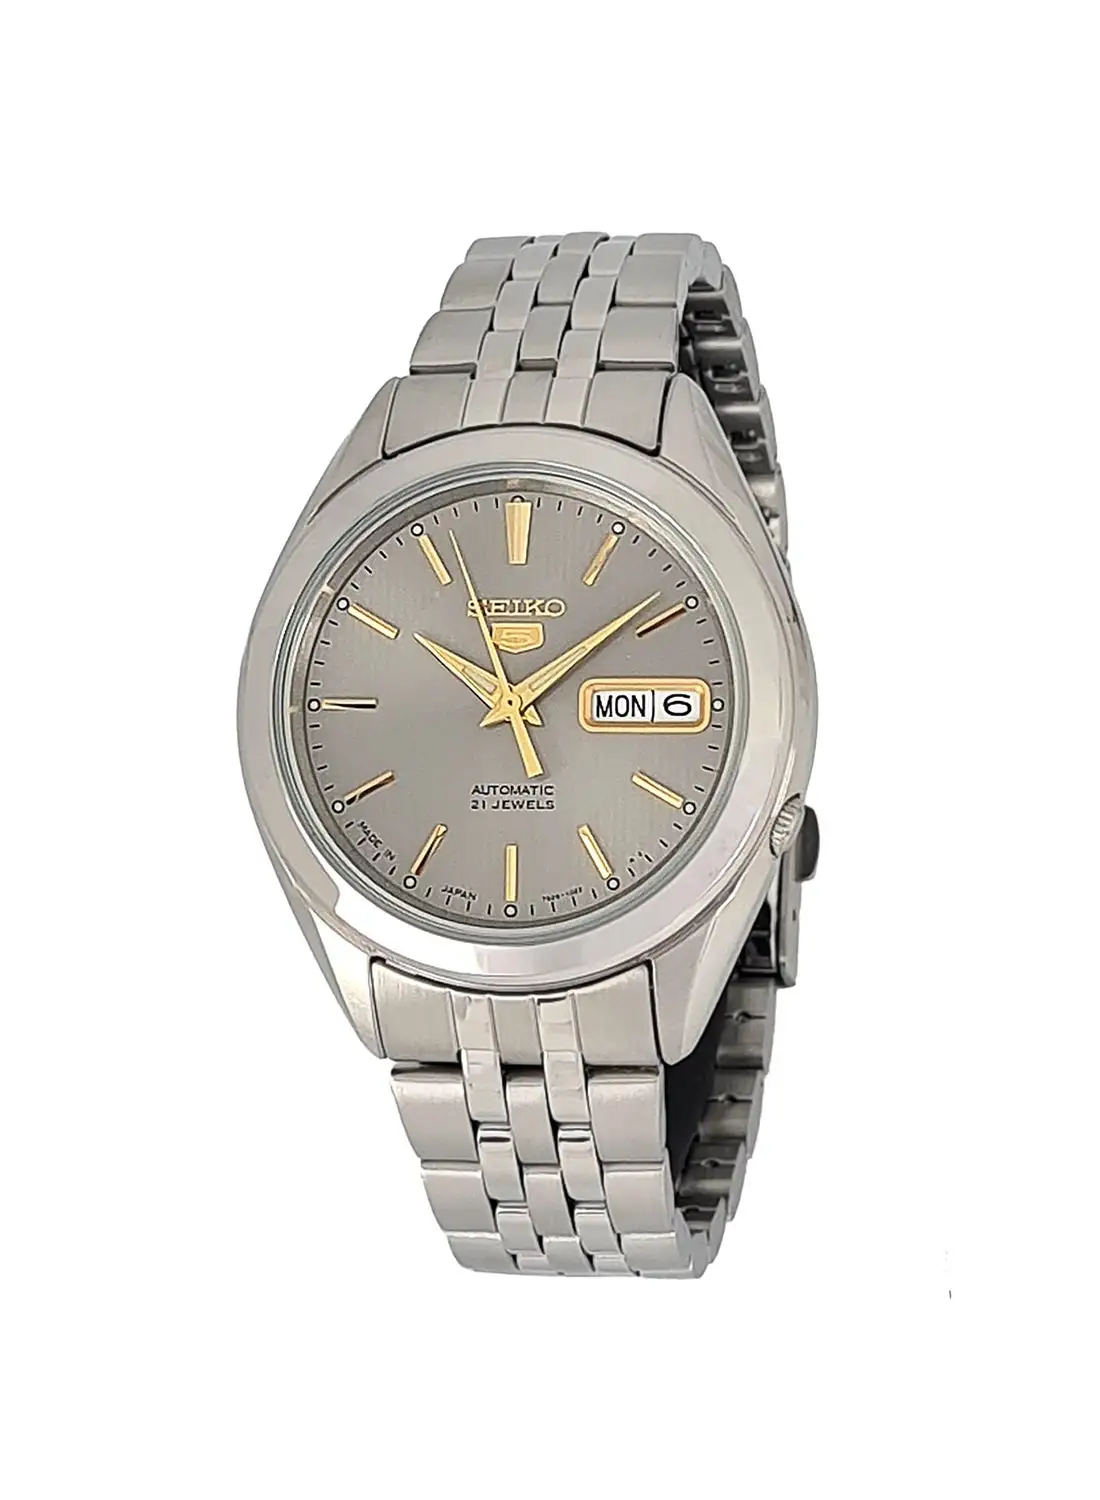 Seiko Men's Round Shape Stainless Steel Analog Wrist Watch 38 mm - Silver - SNKL19J1